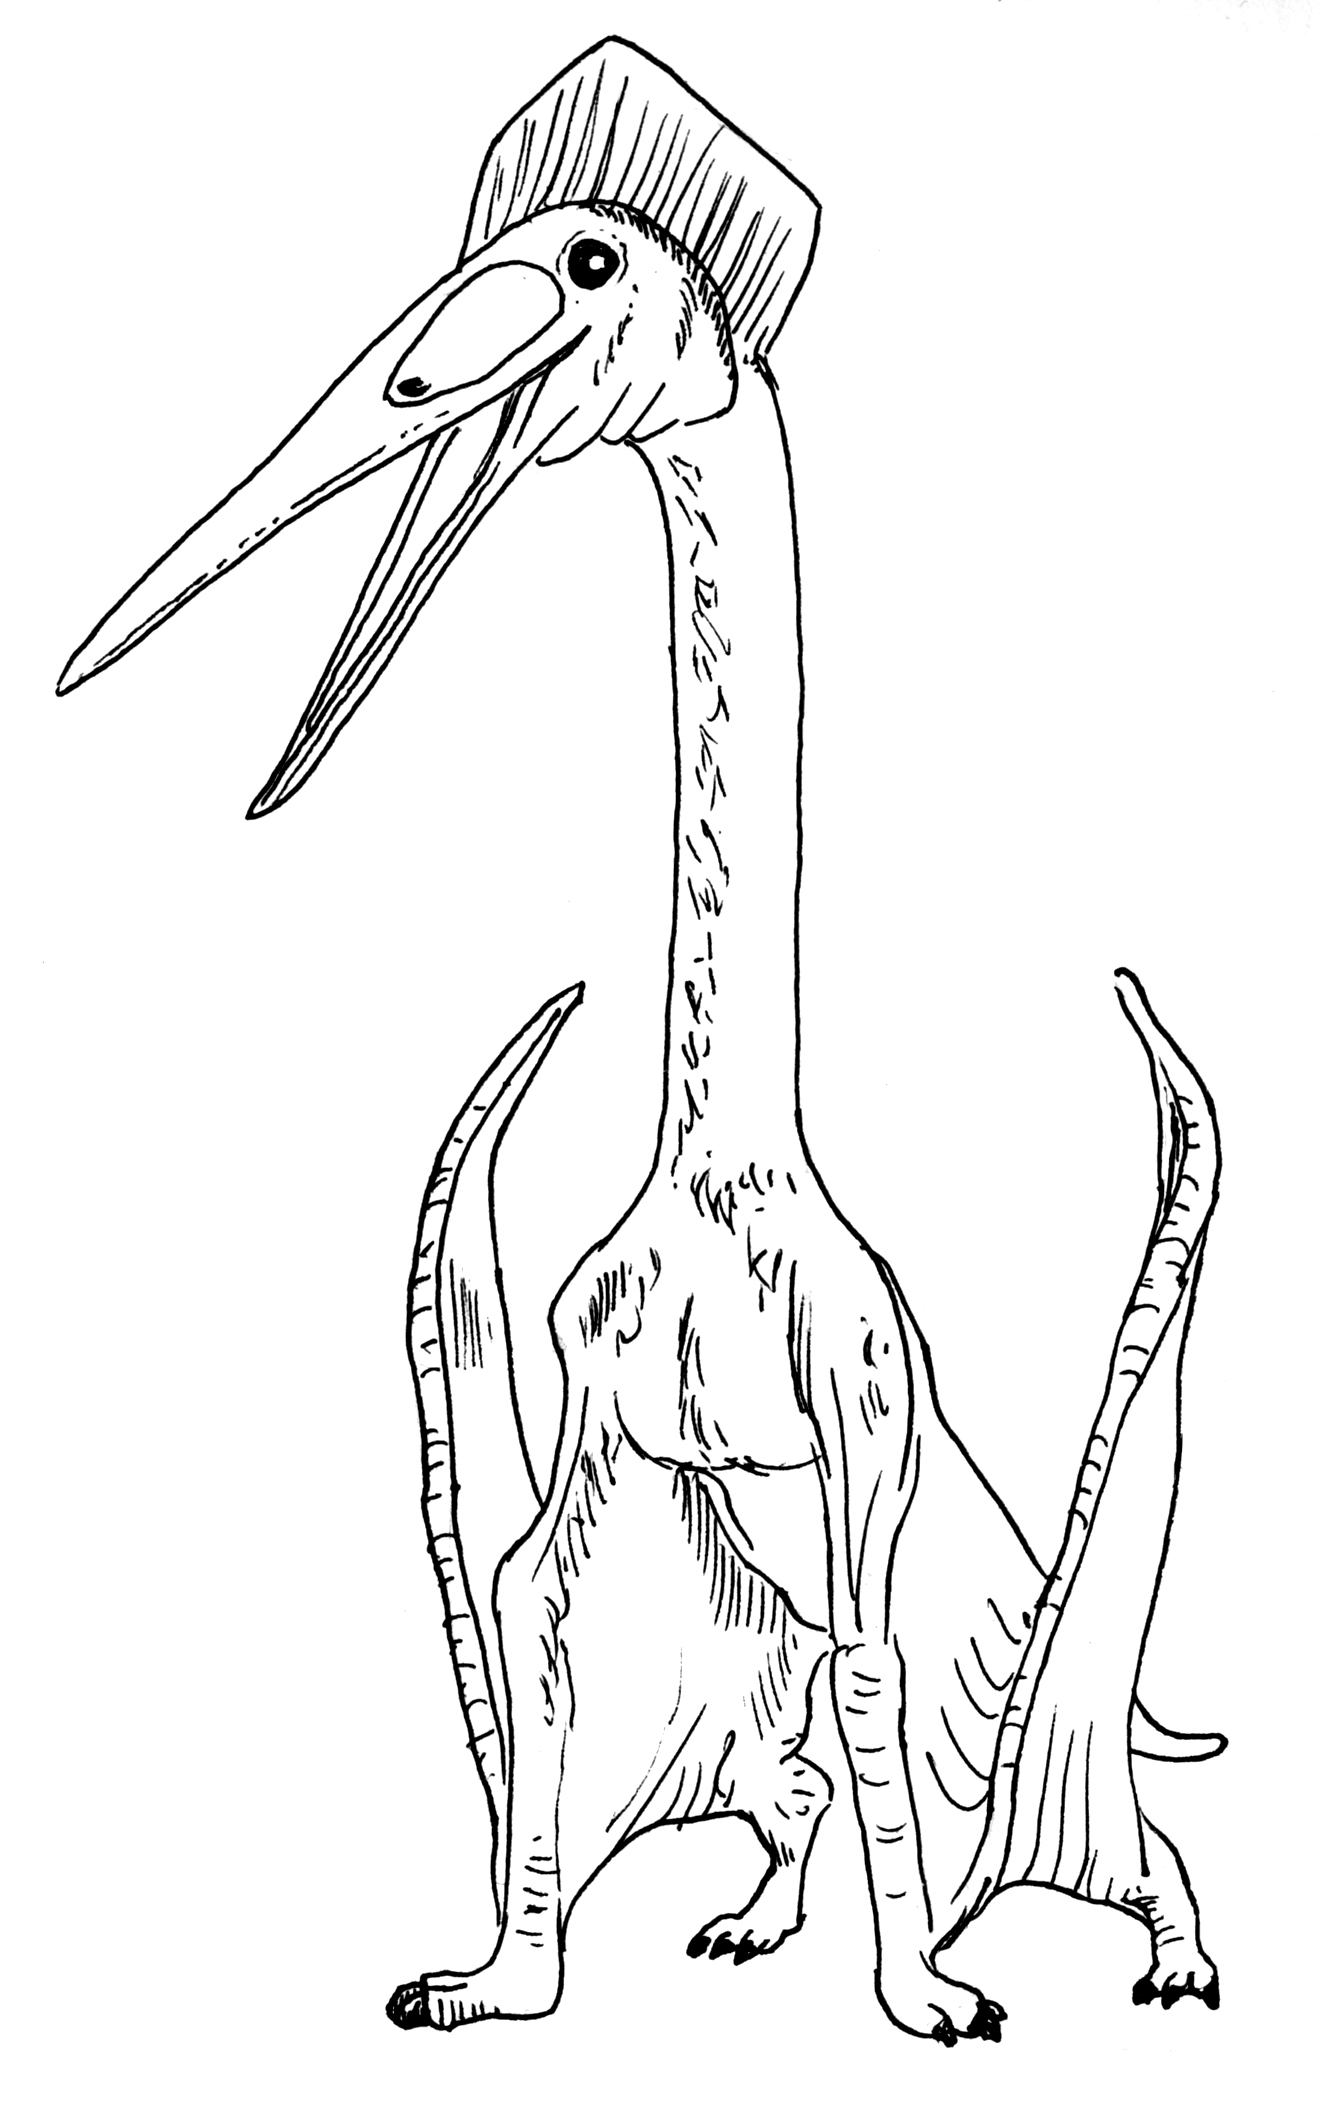 Hatzegopteryx drawing.